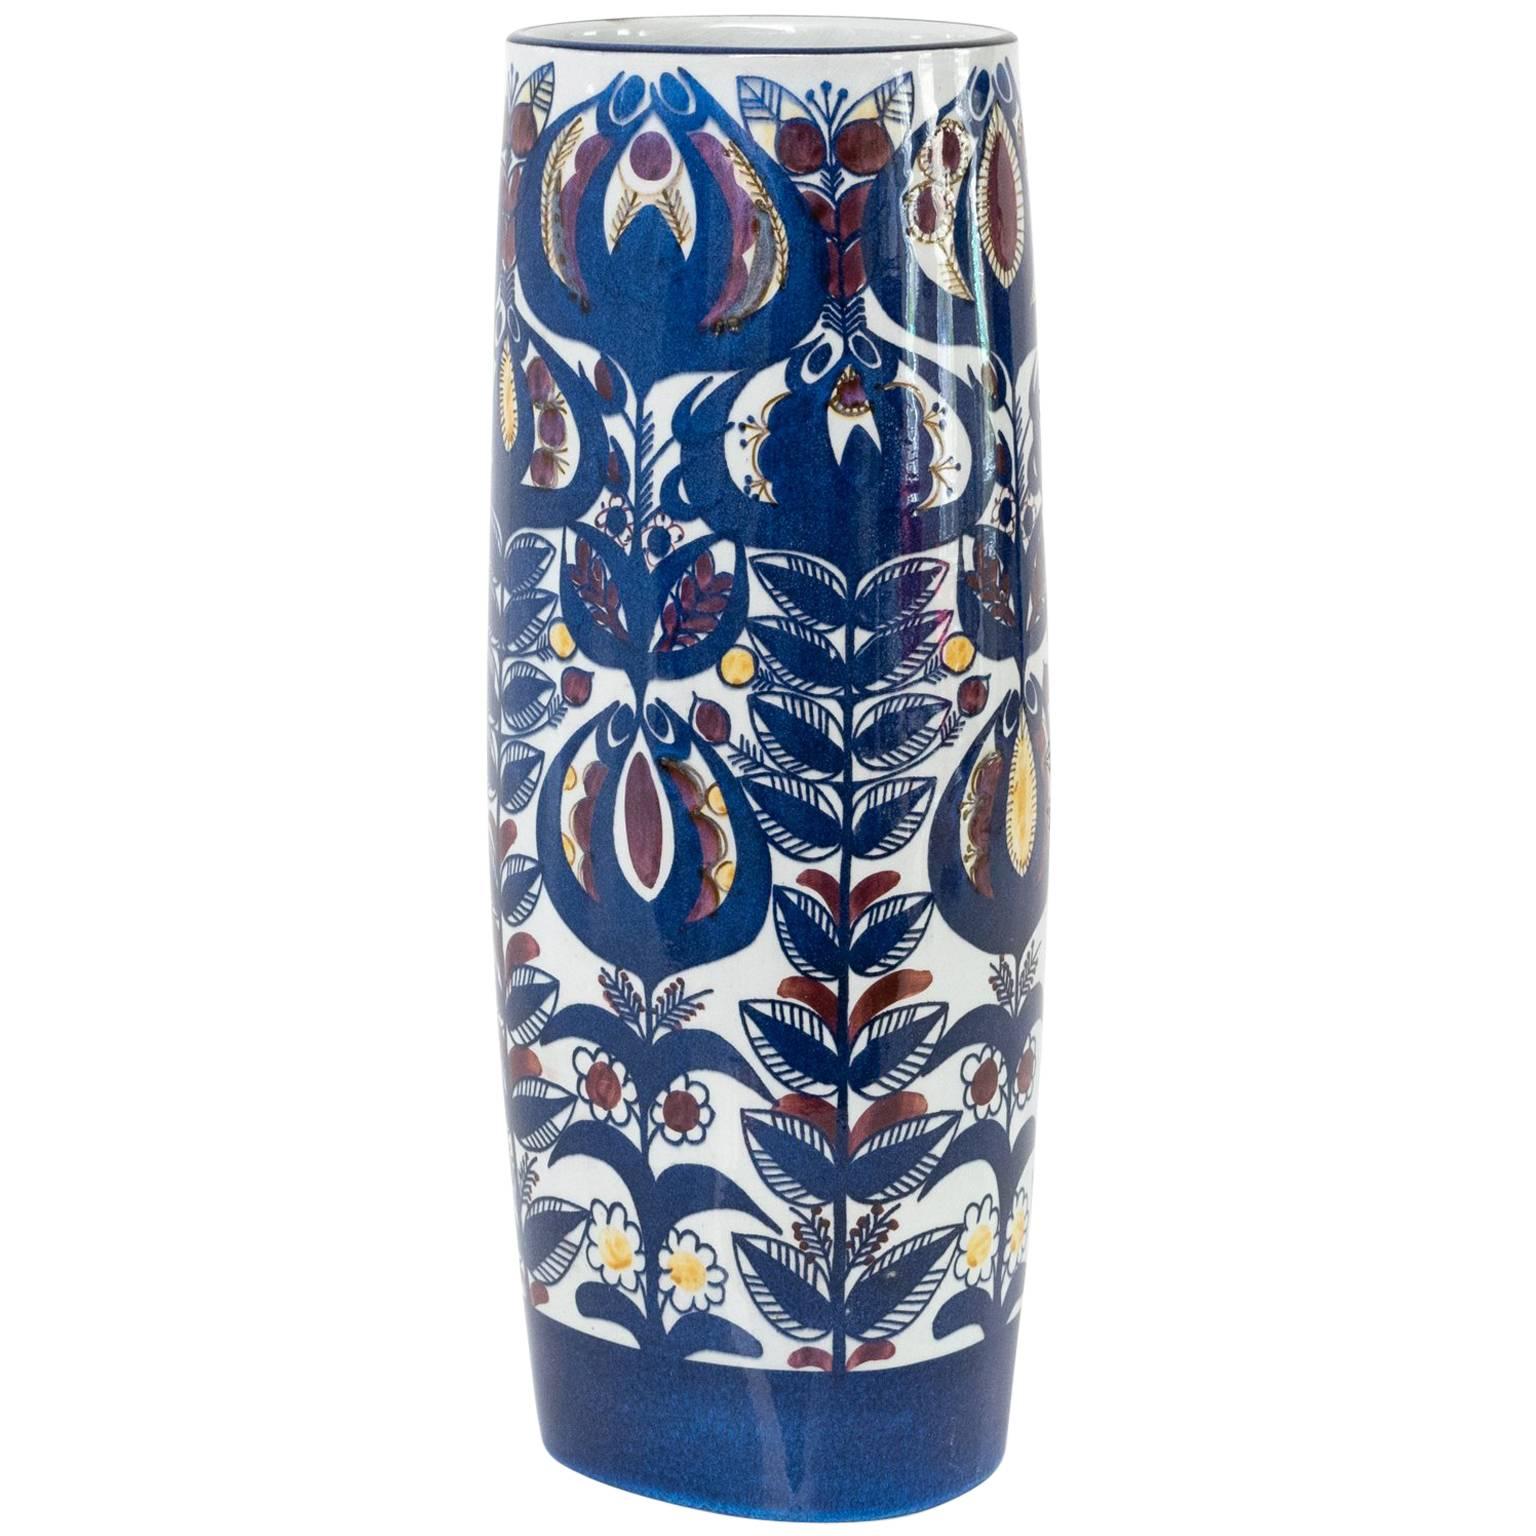 Inge-Lise Koefoed Designed "Tenara" Vase for Aluminia ‘Royal Copenhagen’